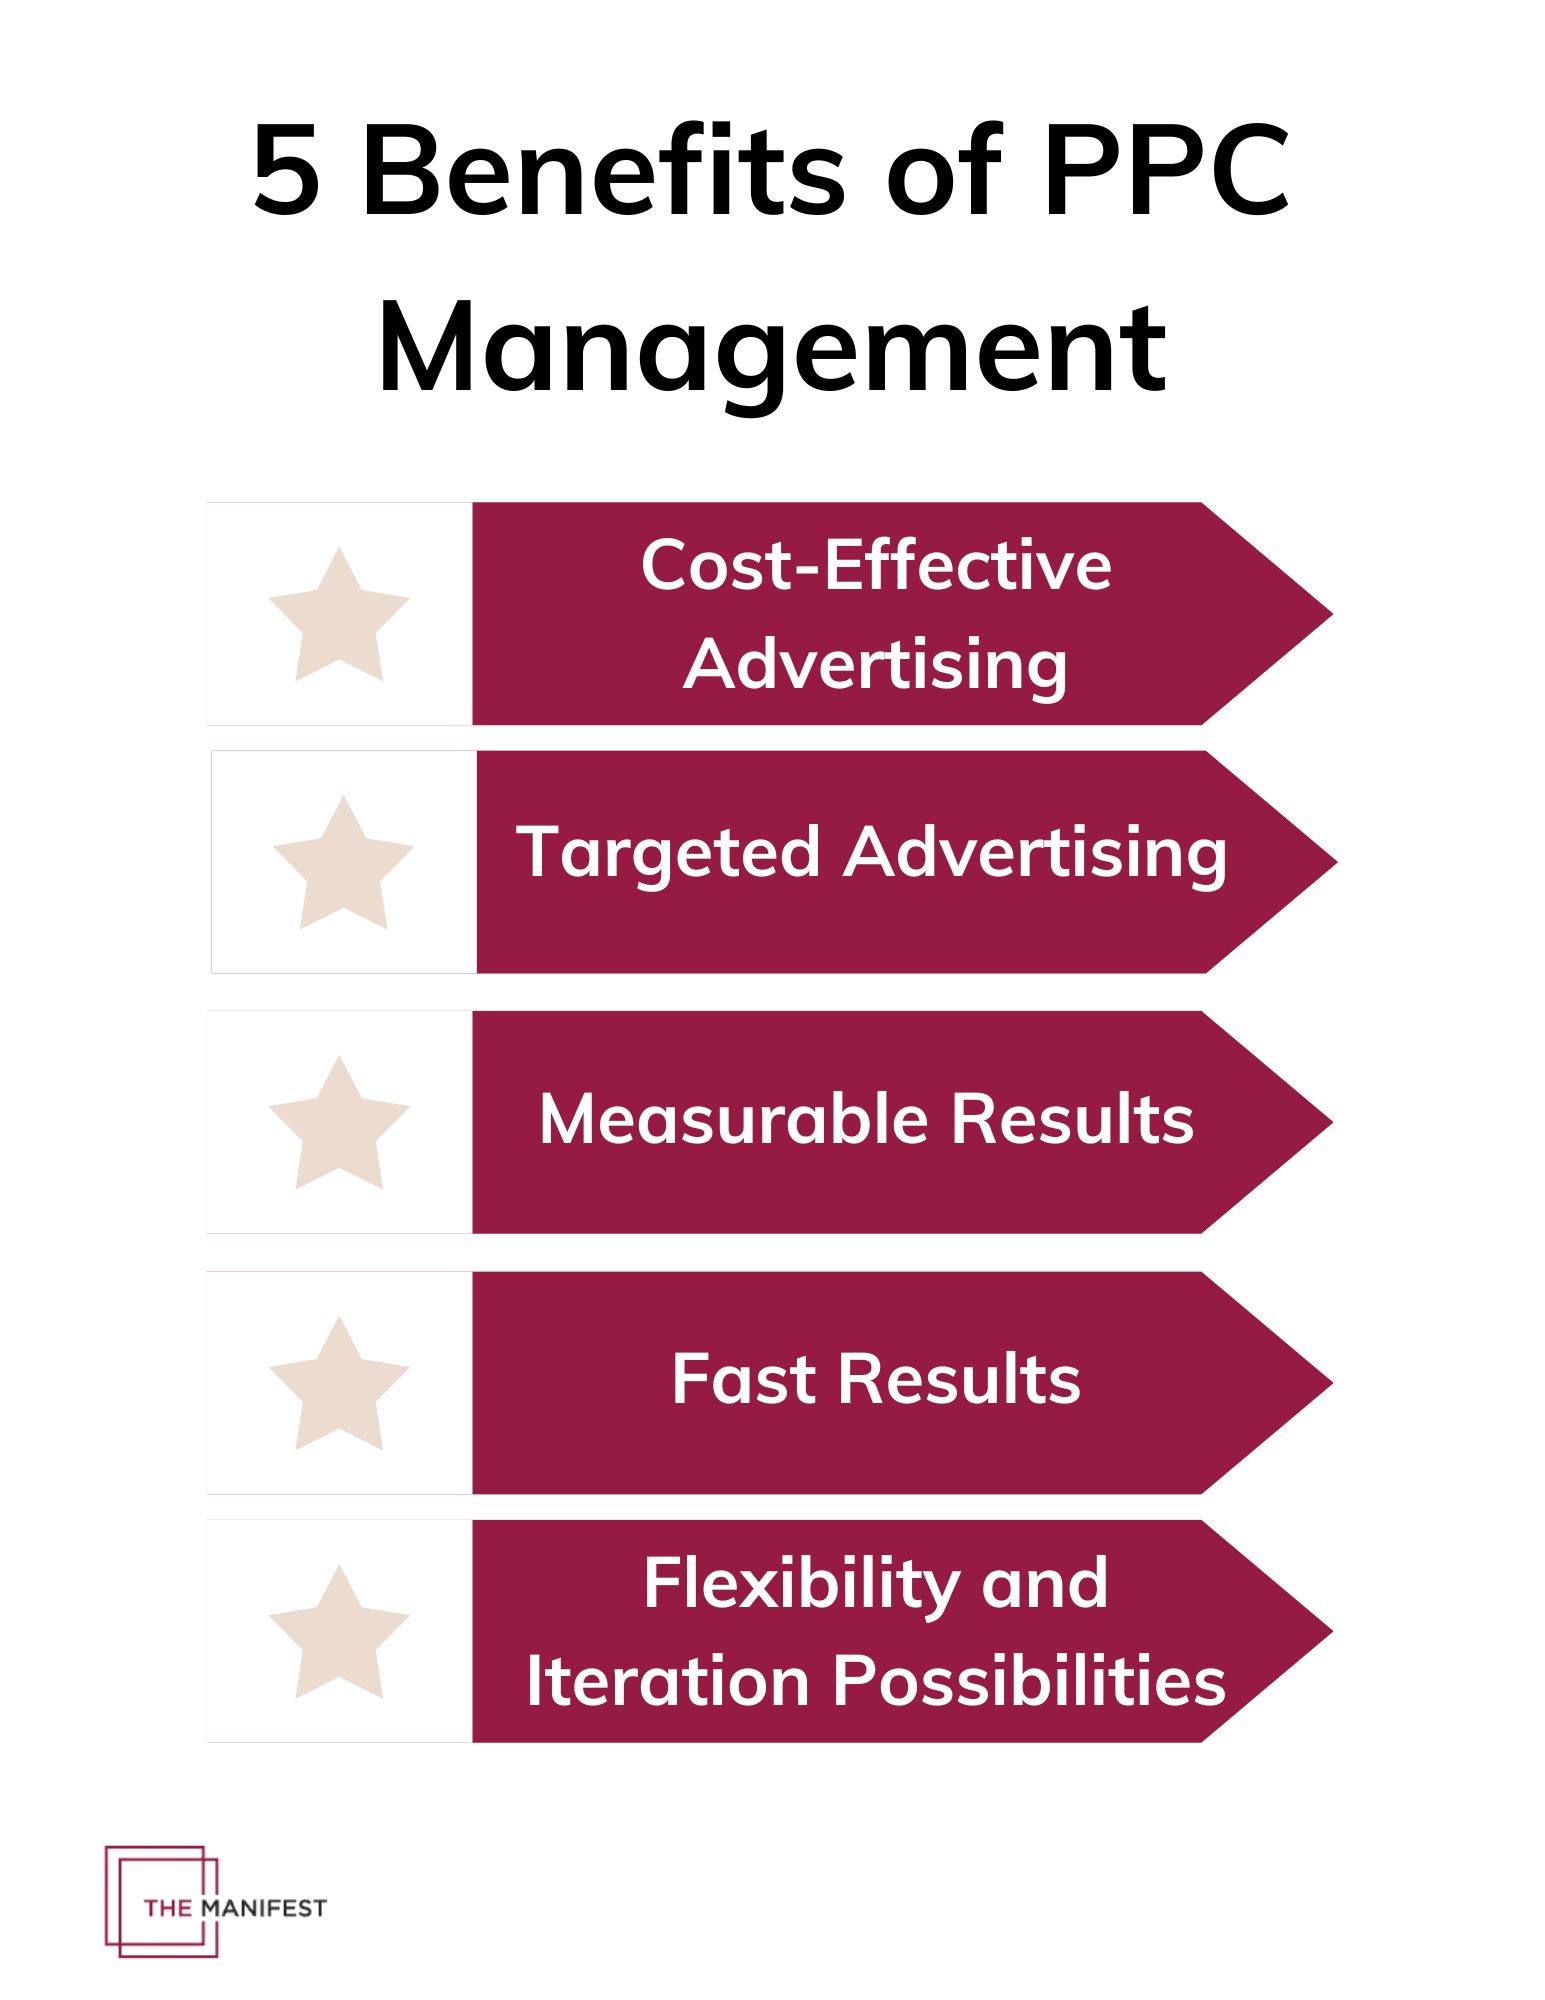 5 benefits of PPC management list graphic